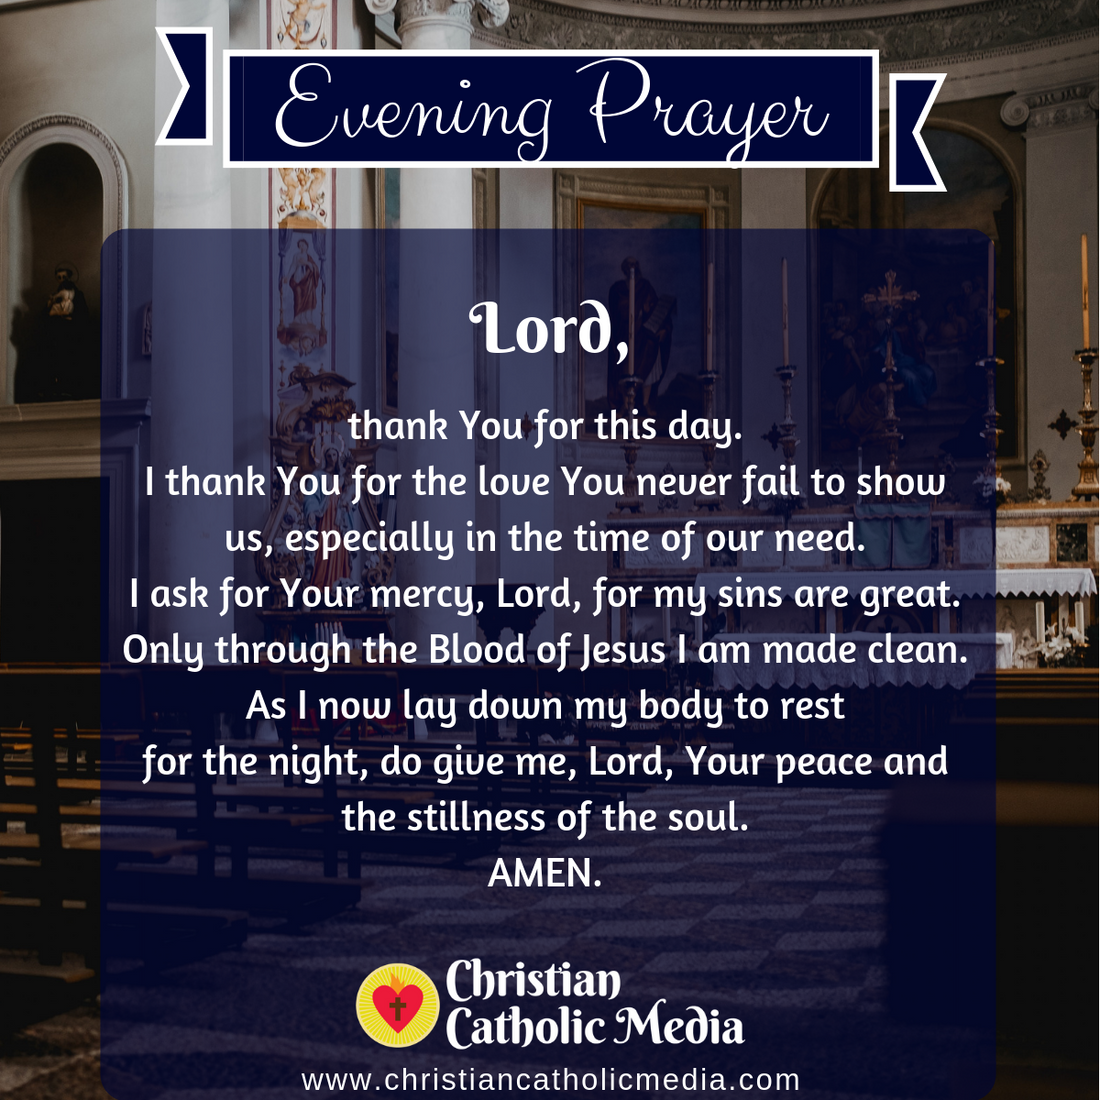 Evening Prayer Catholic Wednesday September 22, 2021